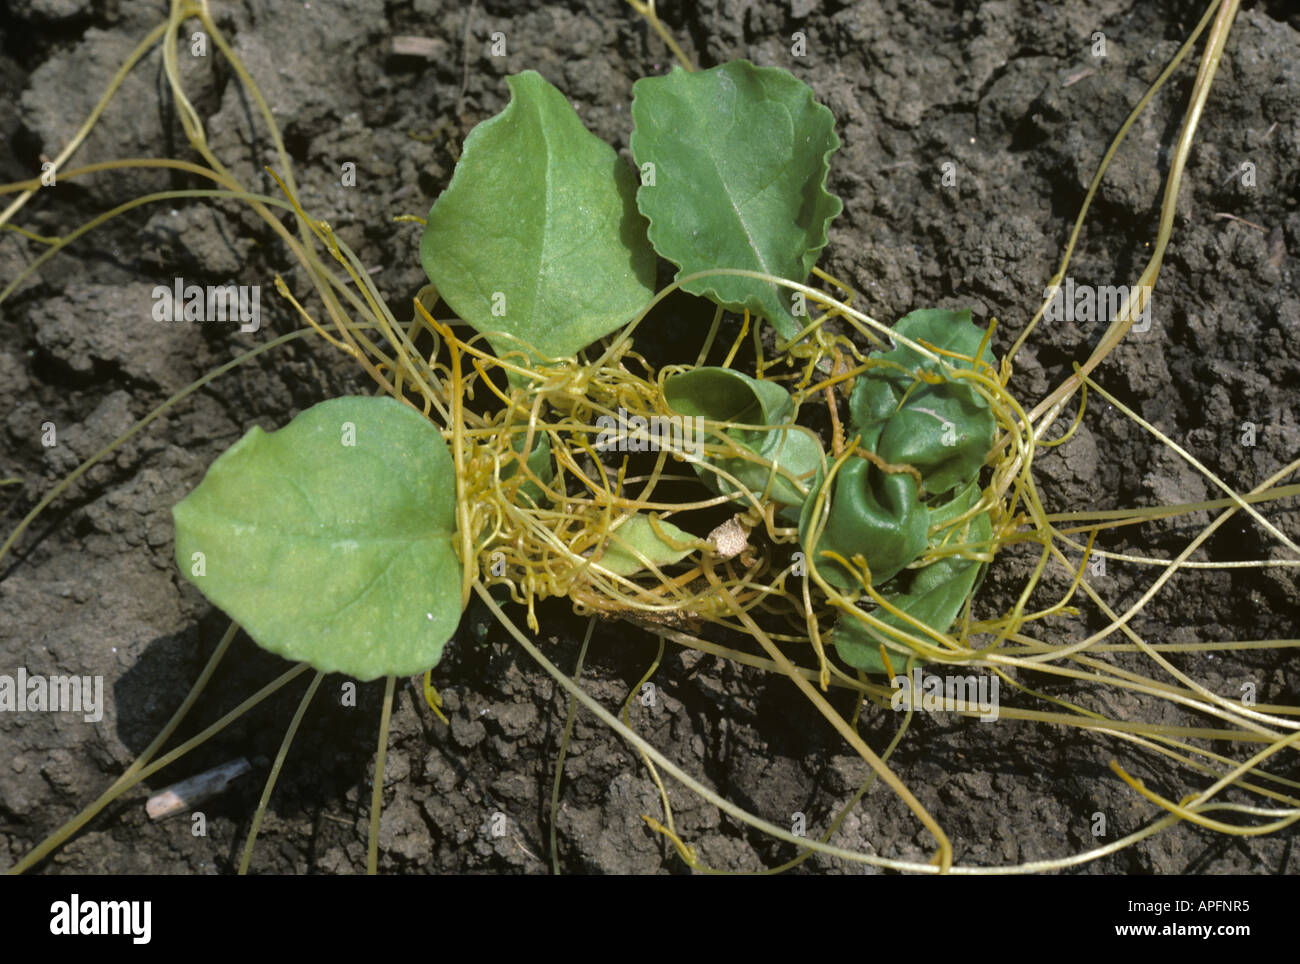 Dodder or strangleweed Cuscuta epithymum parasitic weed on seedling sugar beet Greece Stock Photo